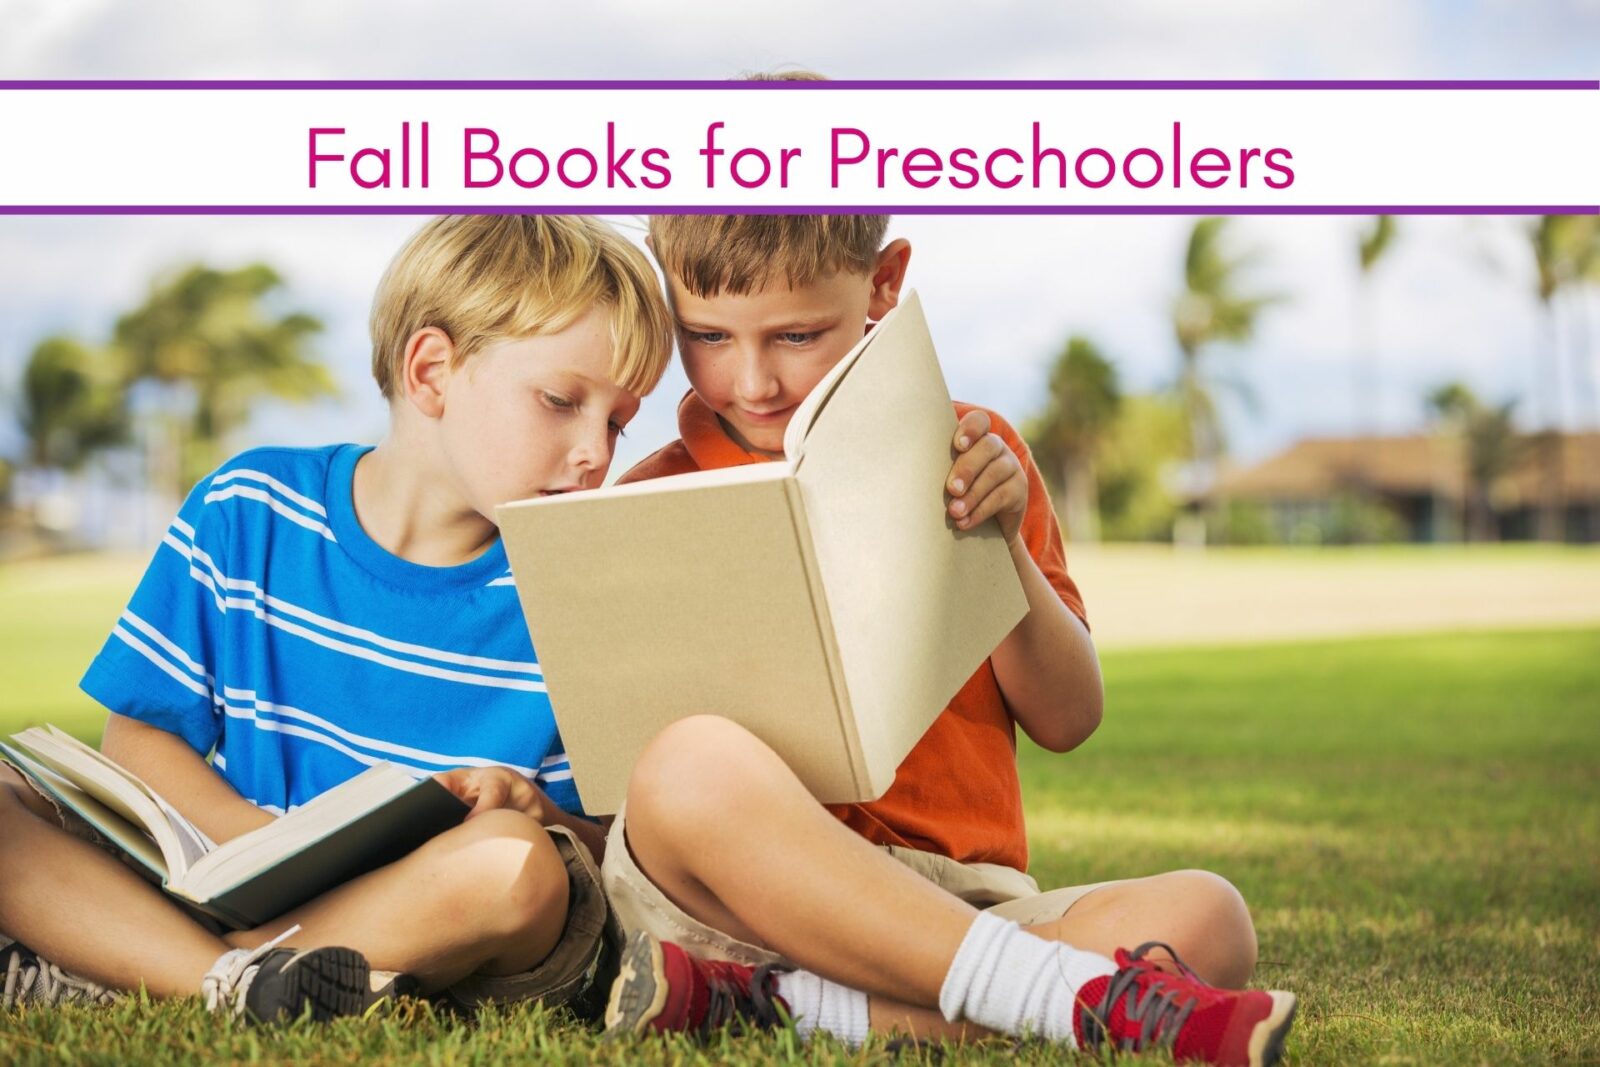 Fall Books for Preschoolers